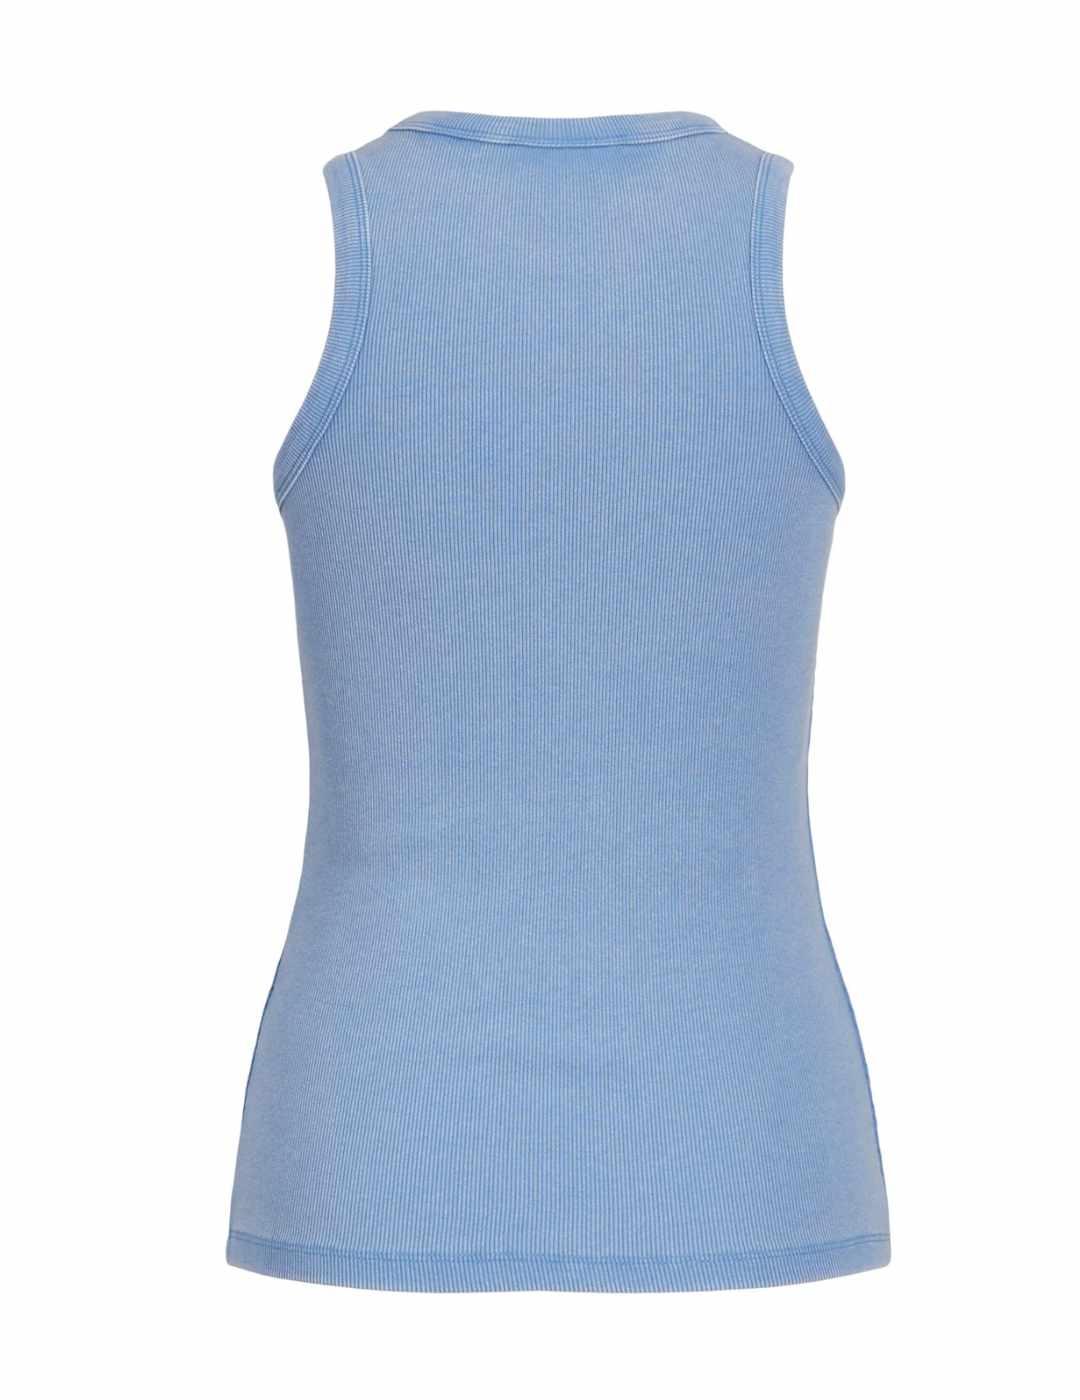 Camiseta JJXX Forest azul metalizado tirantes ajustada mujer